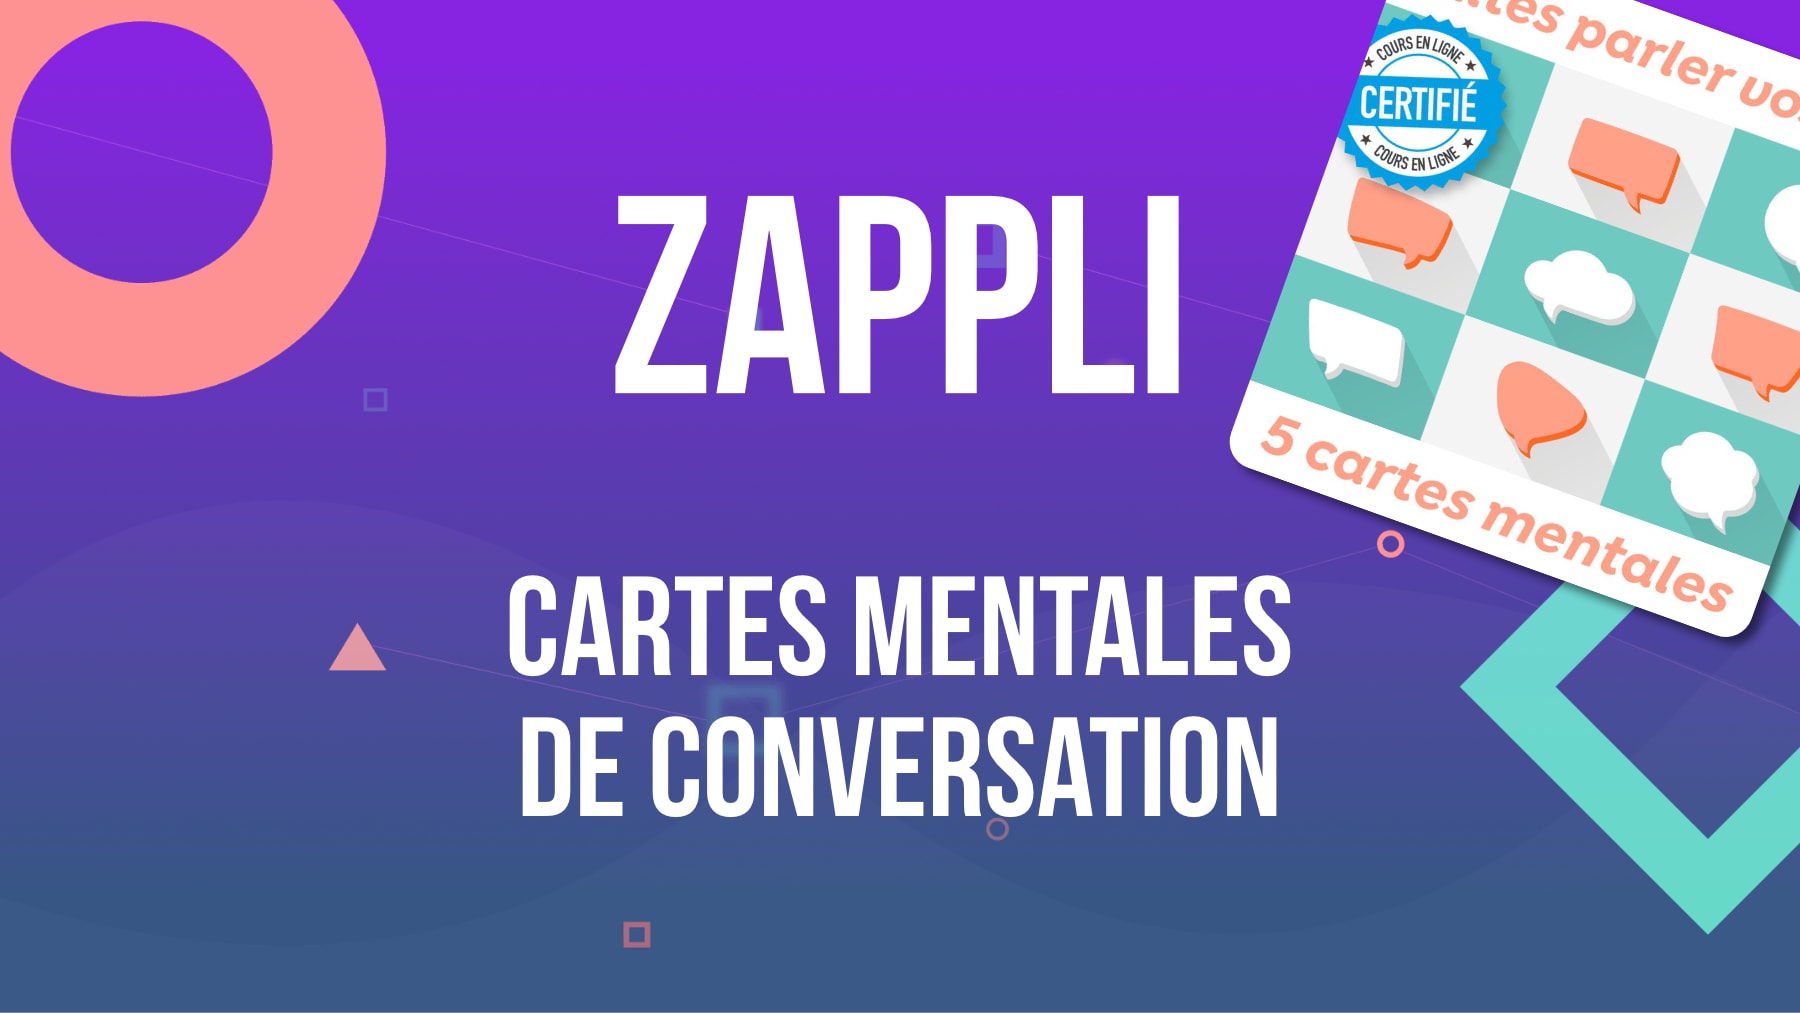 Les cartes mentales de conversation et la Zappli !